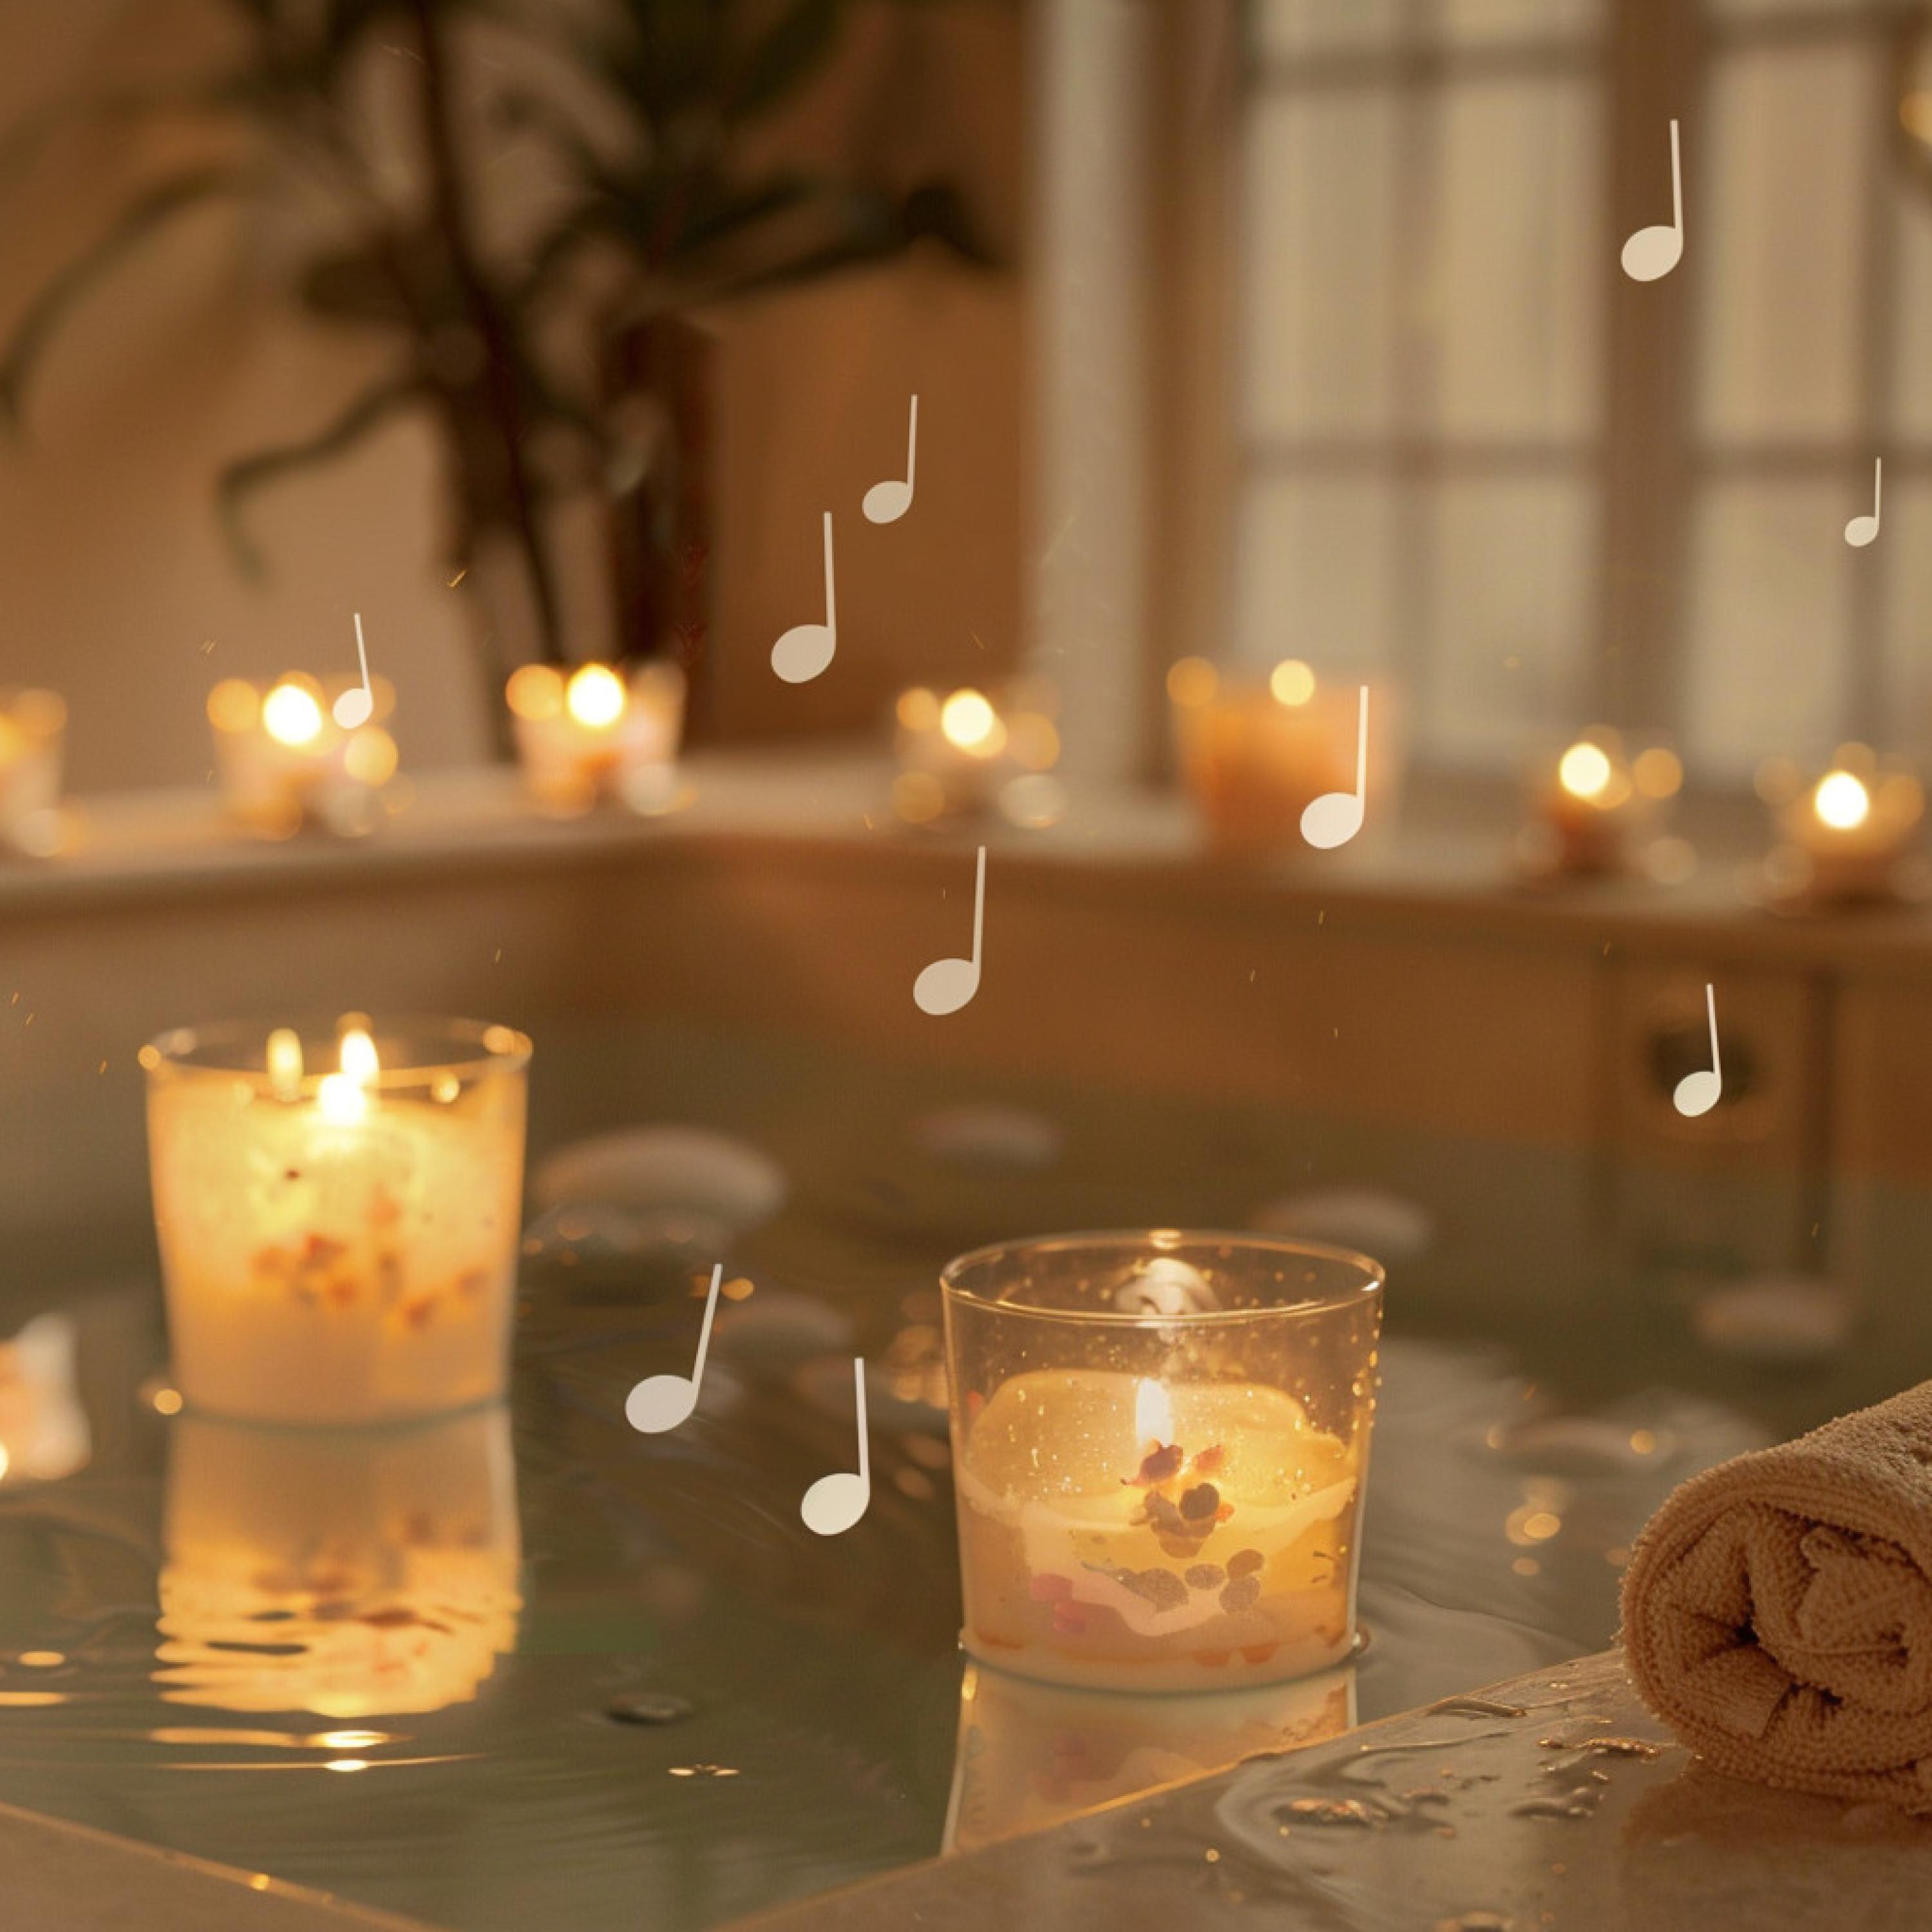 Pure Massage Music - Massage's Serene Tune